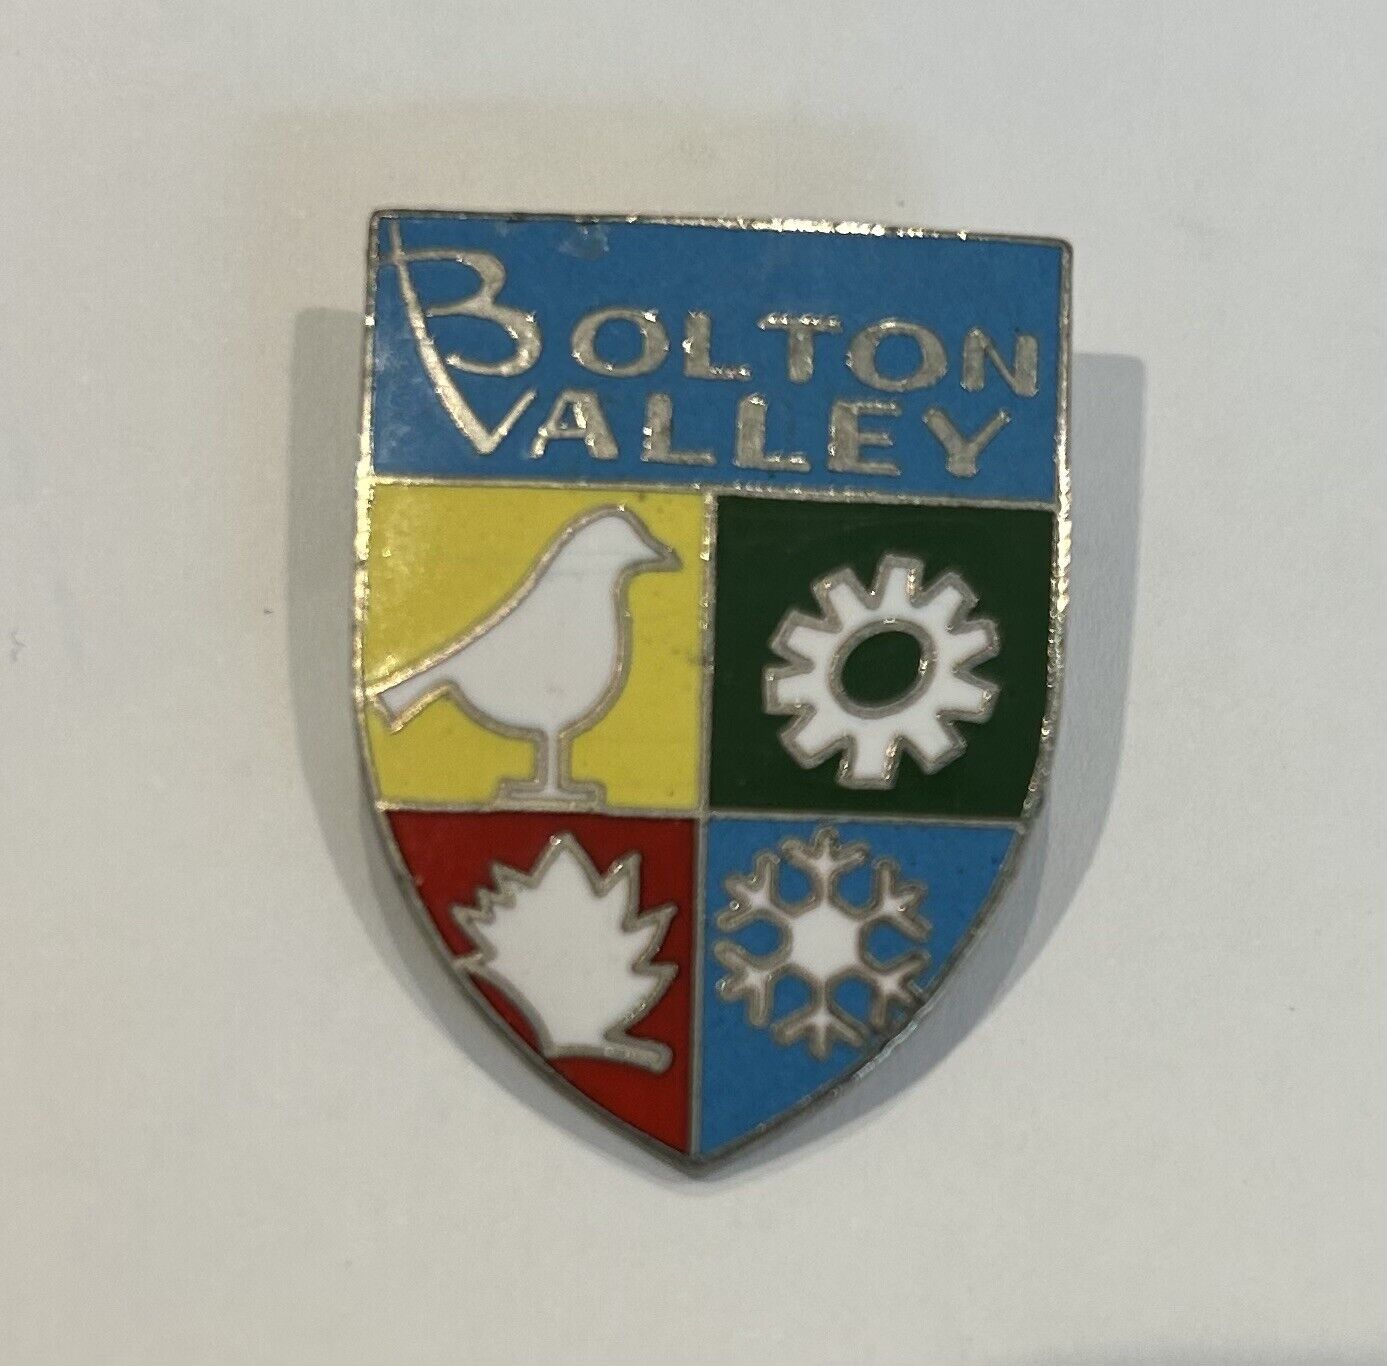 Bolton Valley Ski Resort Skiing Vermont Lapel Pin Pinback Vintage Very Good Cond